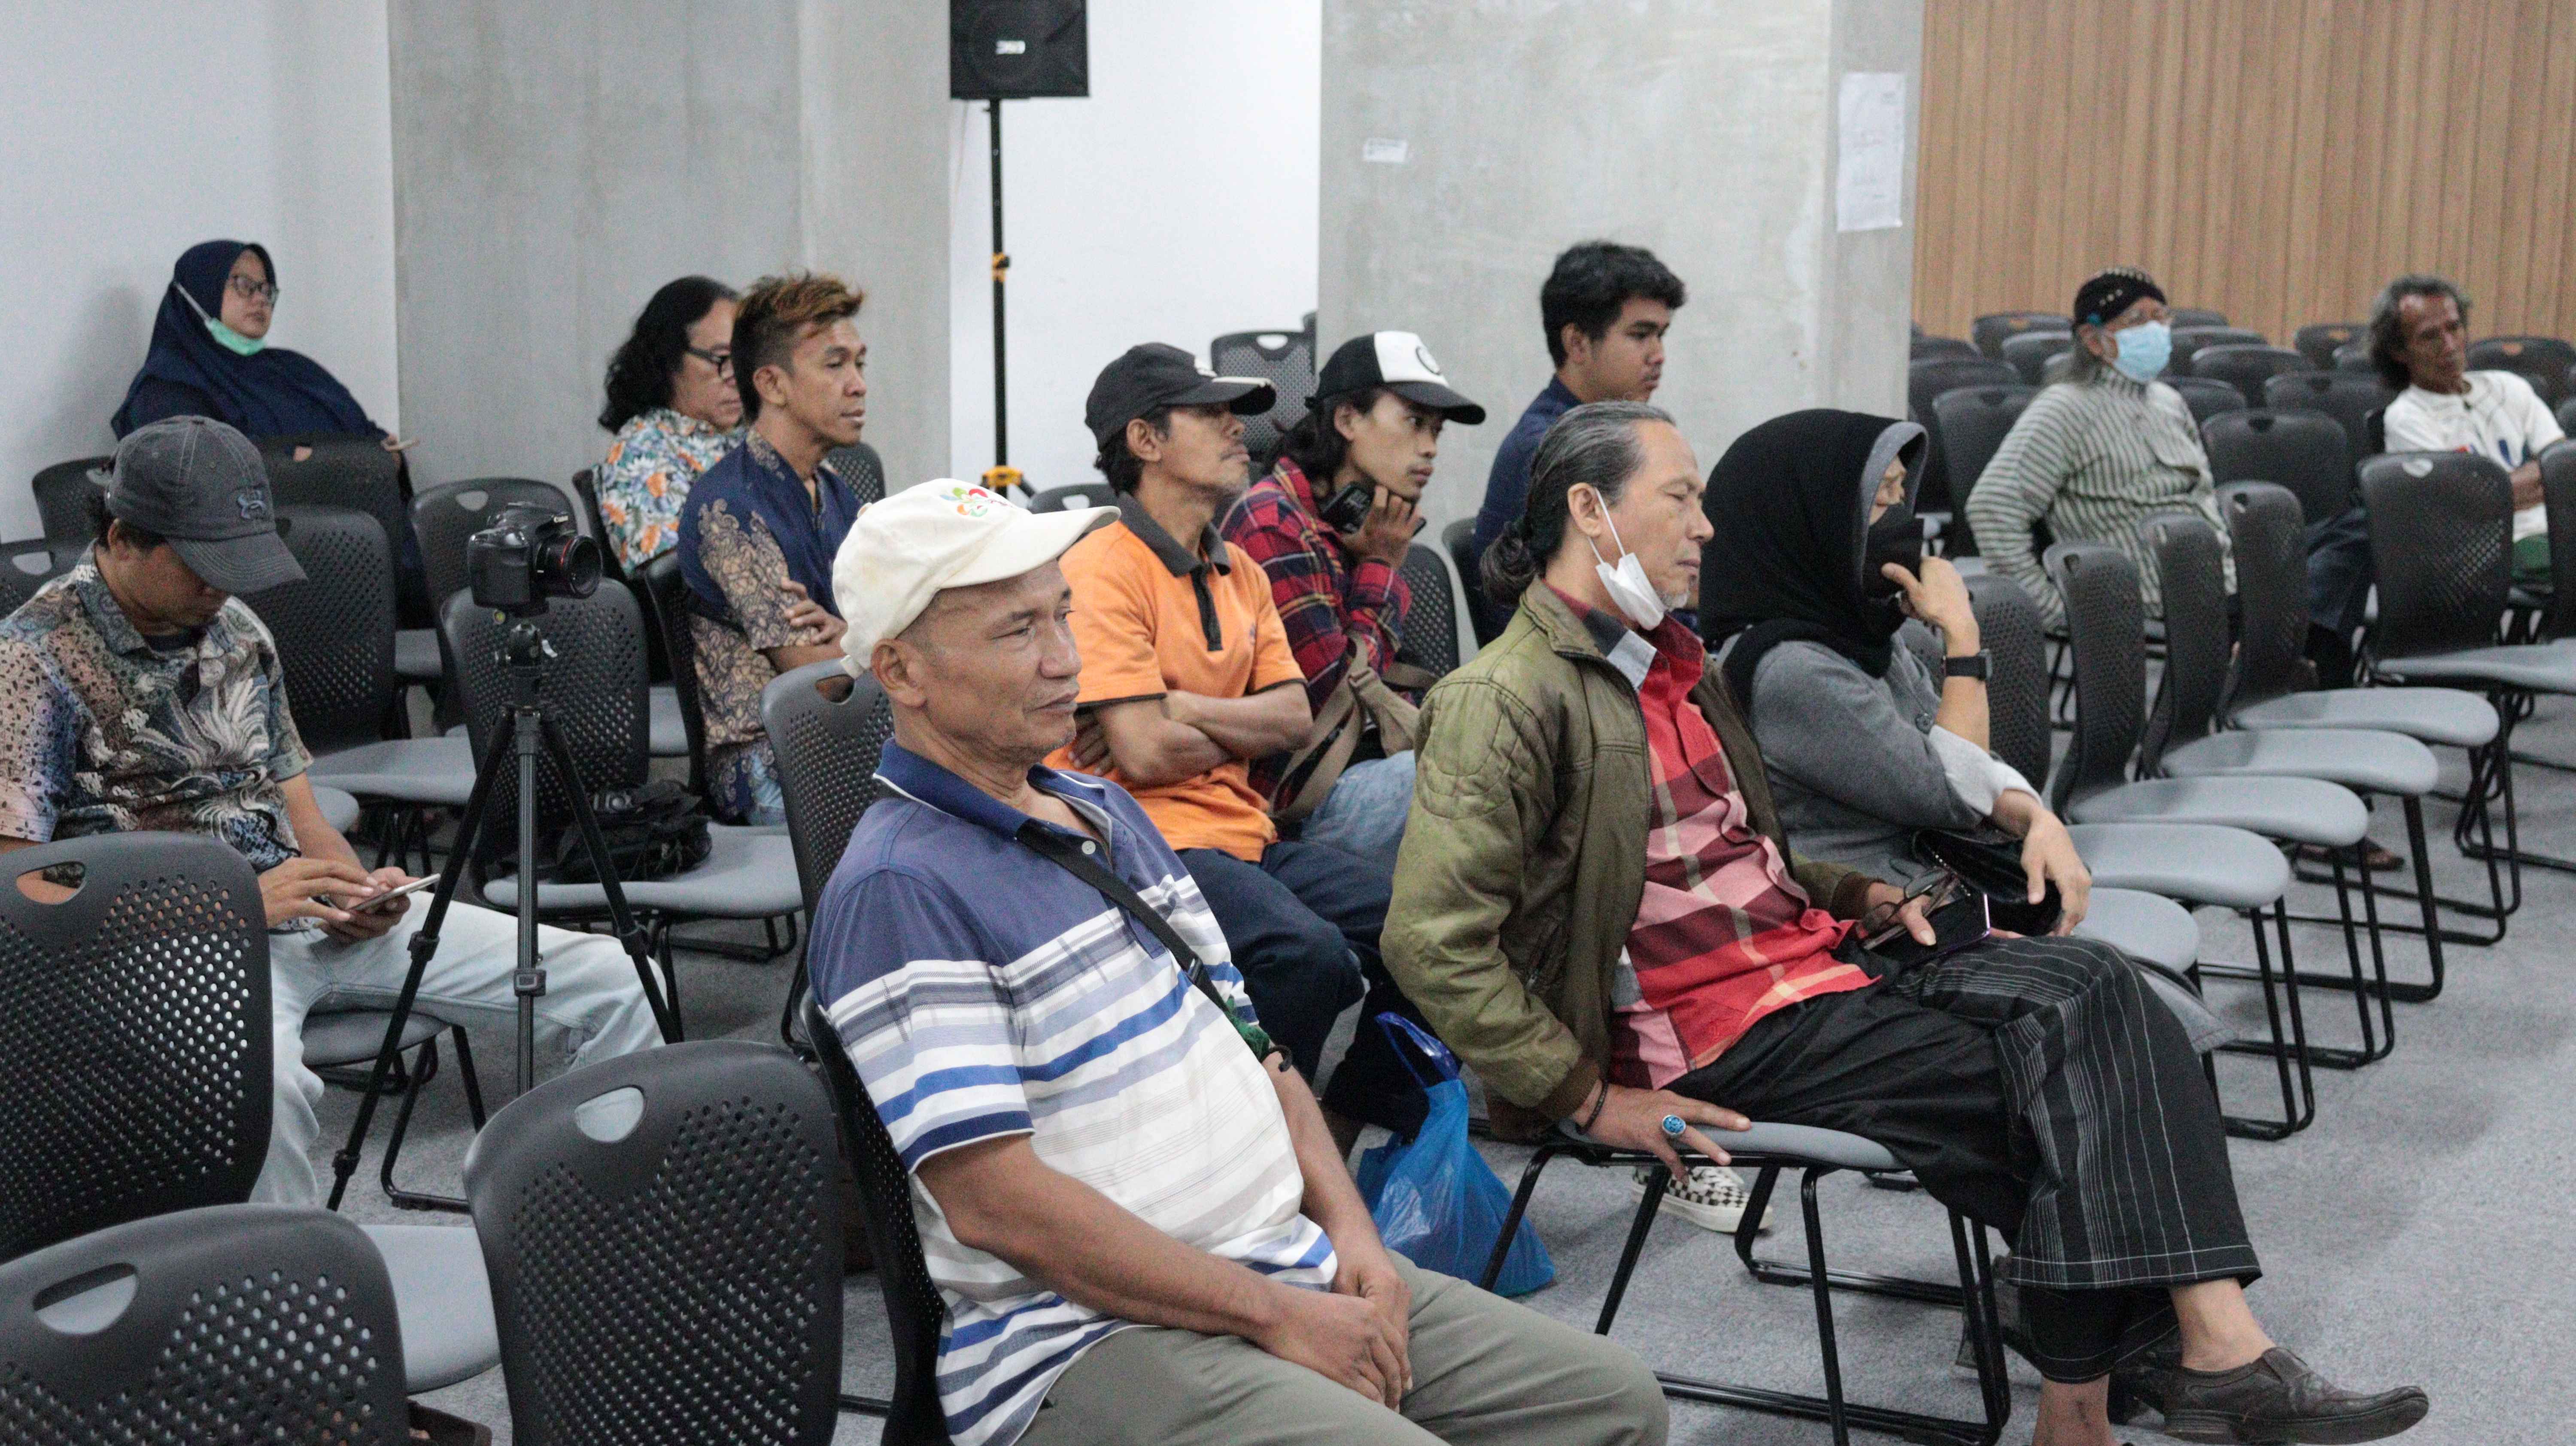 Mimbar Sastra : Workshop Jalan Abadi WS Rendra "Memberi Makna Pada Hidup Yang Fana"